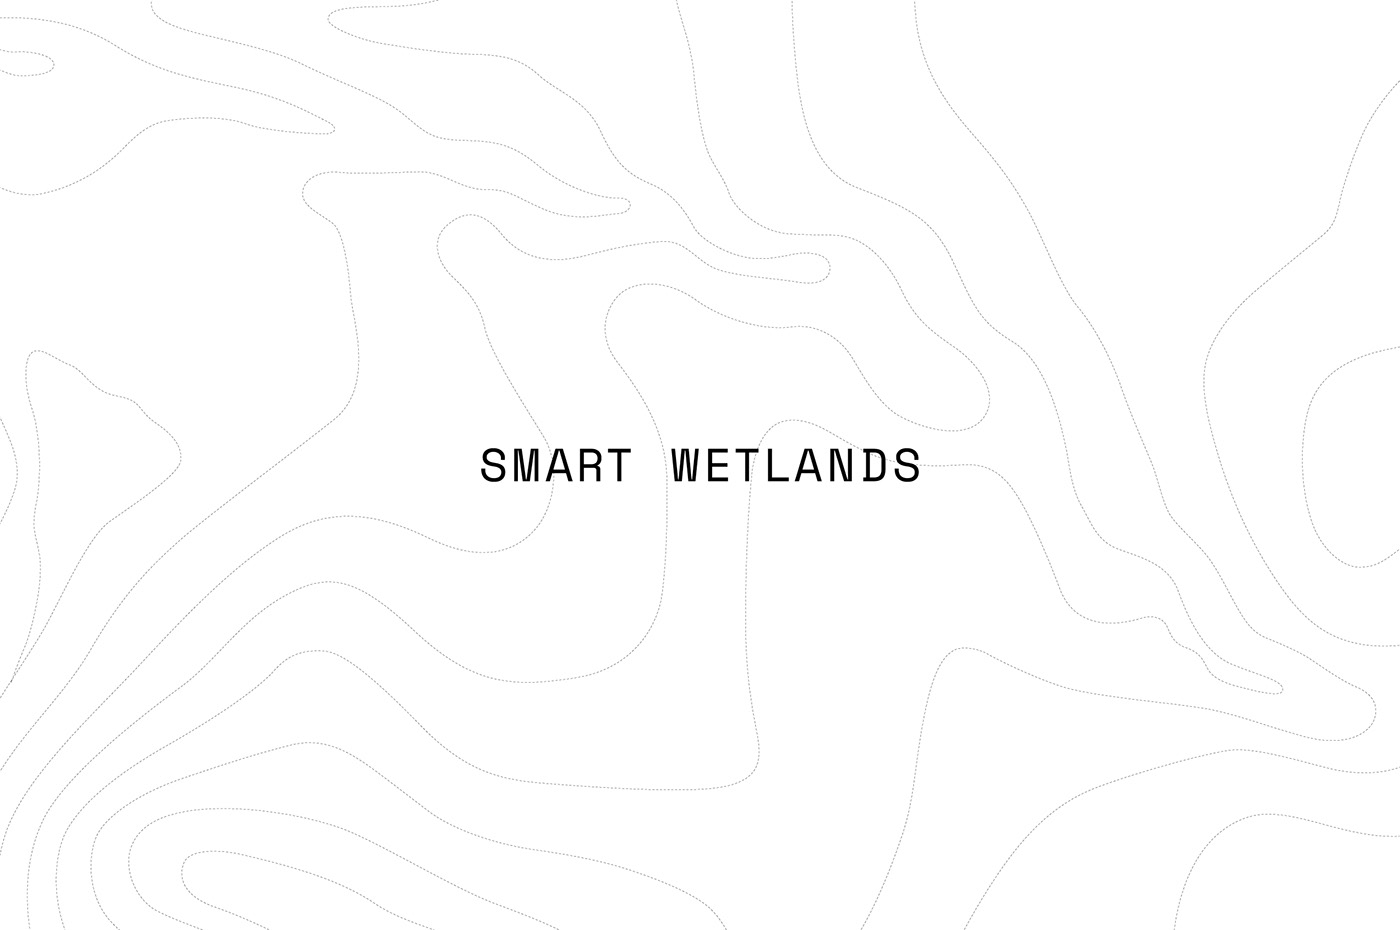 Business card design idea #455: Smart Wetlands